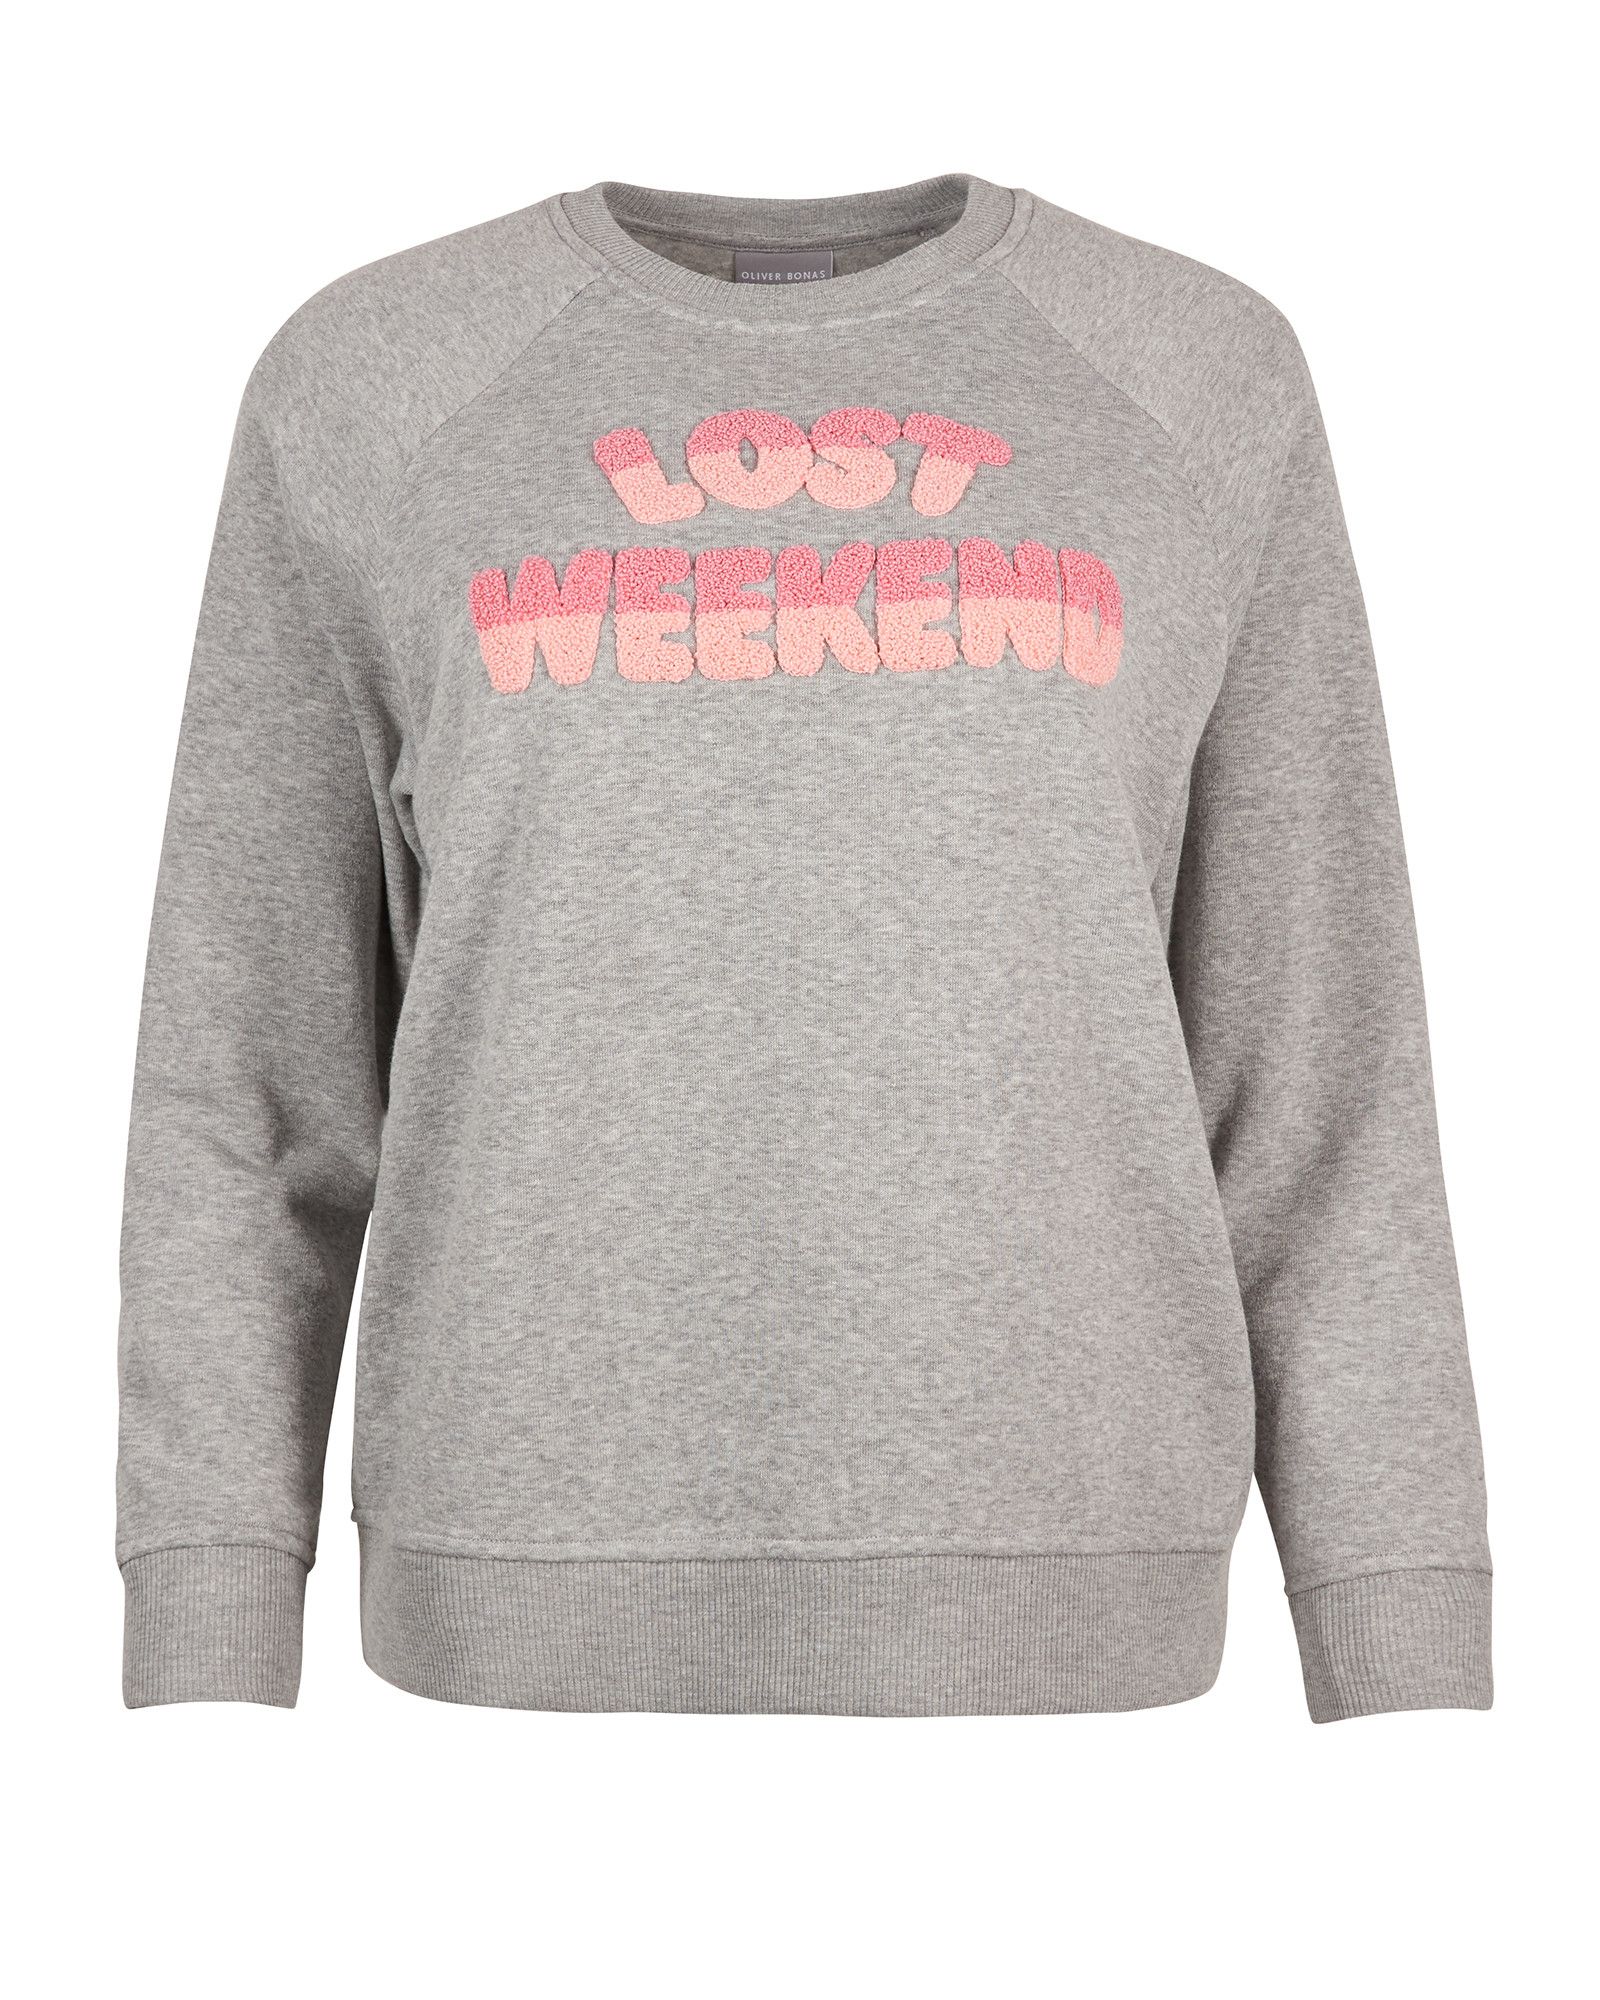 Lost Weekend Grey Marl Sweatshirt | Oliver Bonas